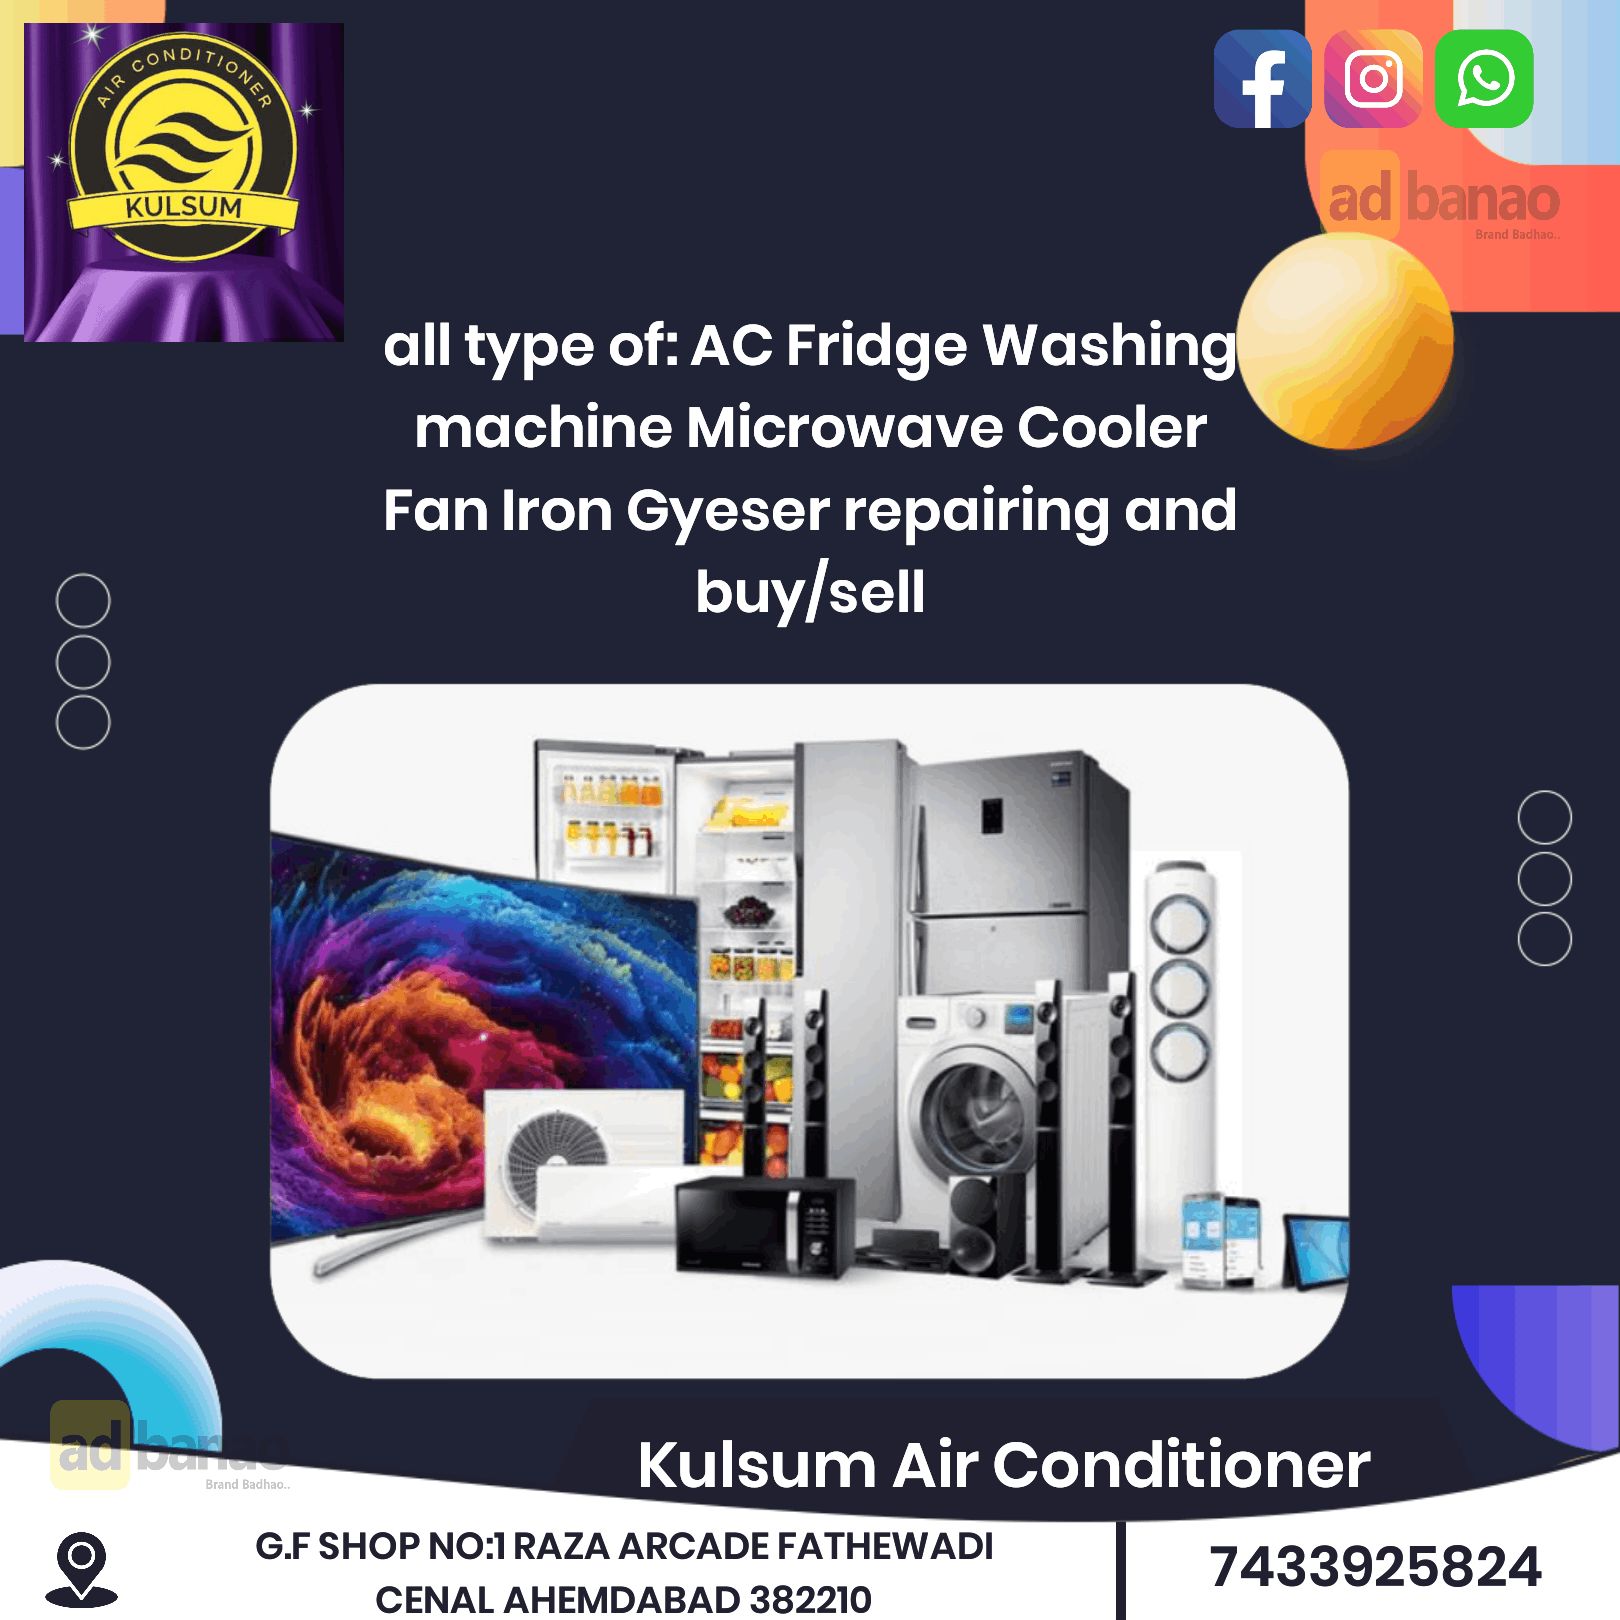 All type of AC Fridge Washing machine Microwave oven service and repairing work 